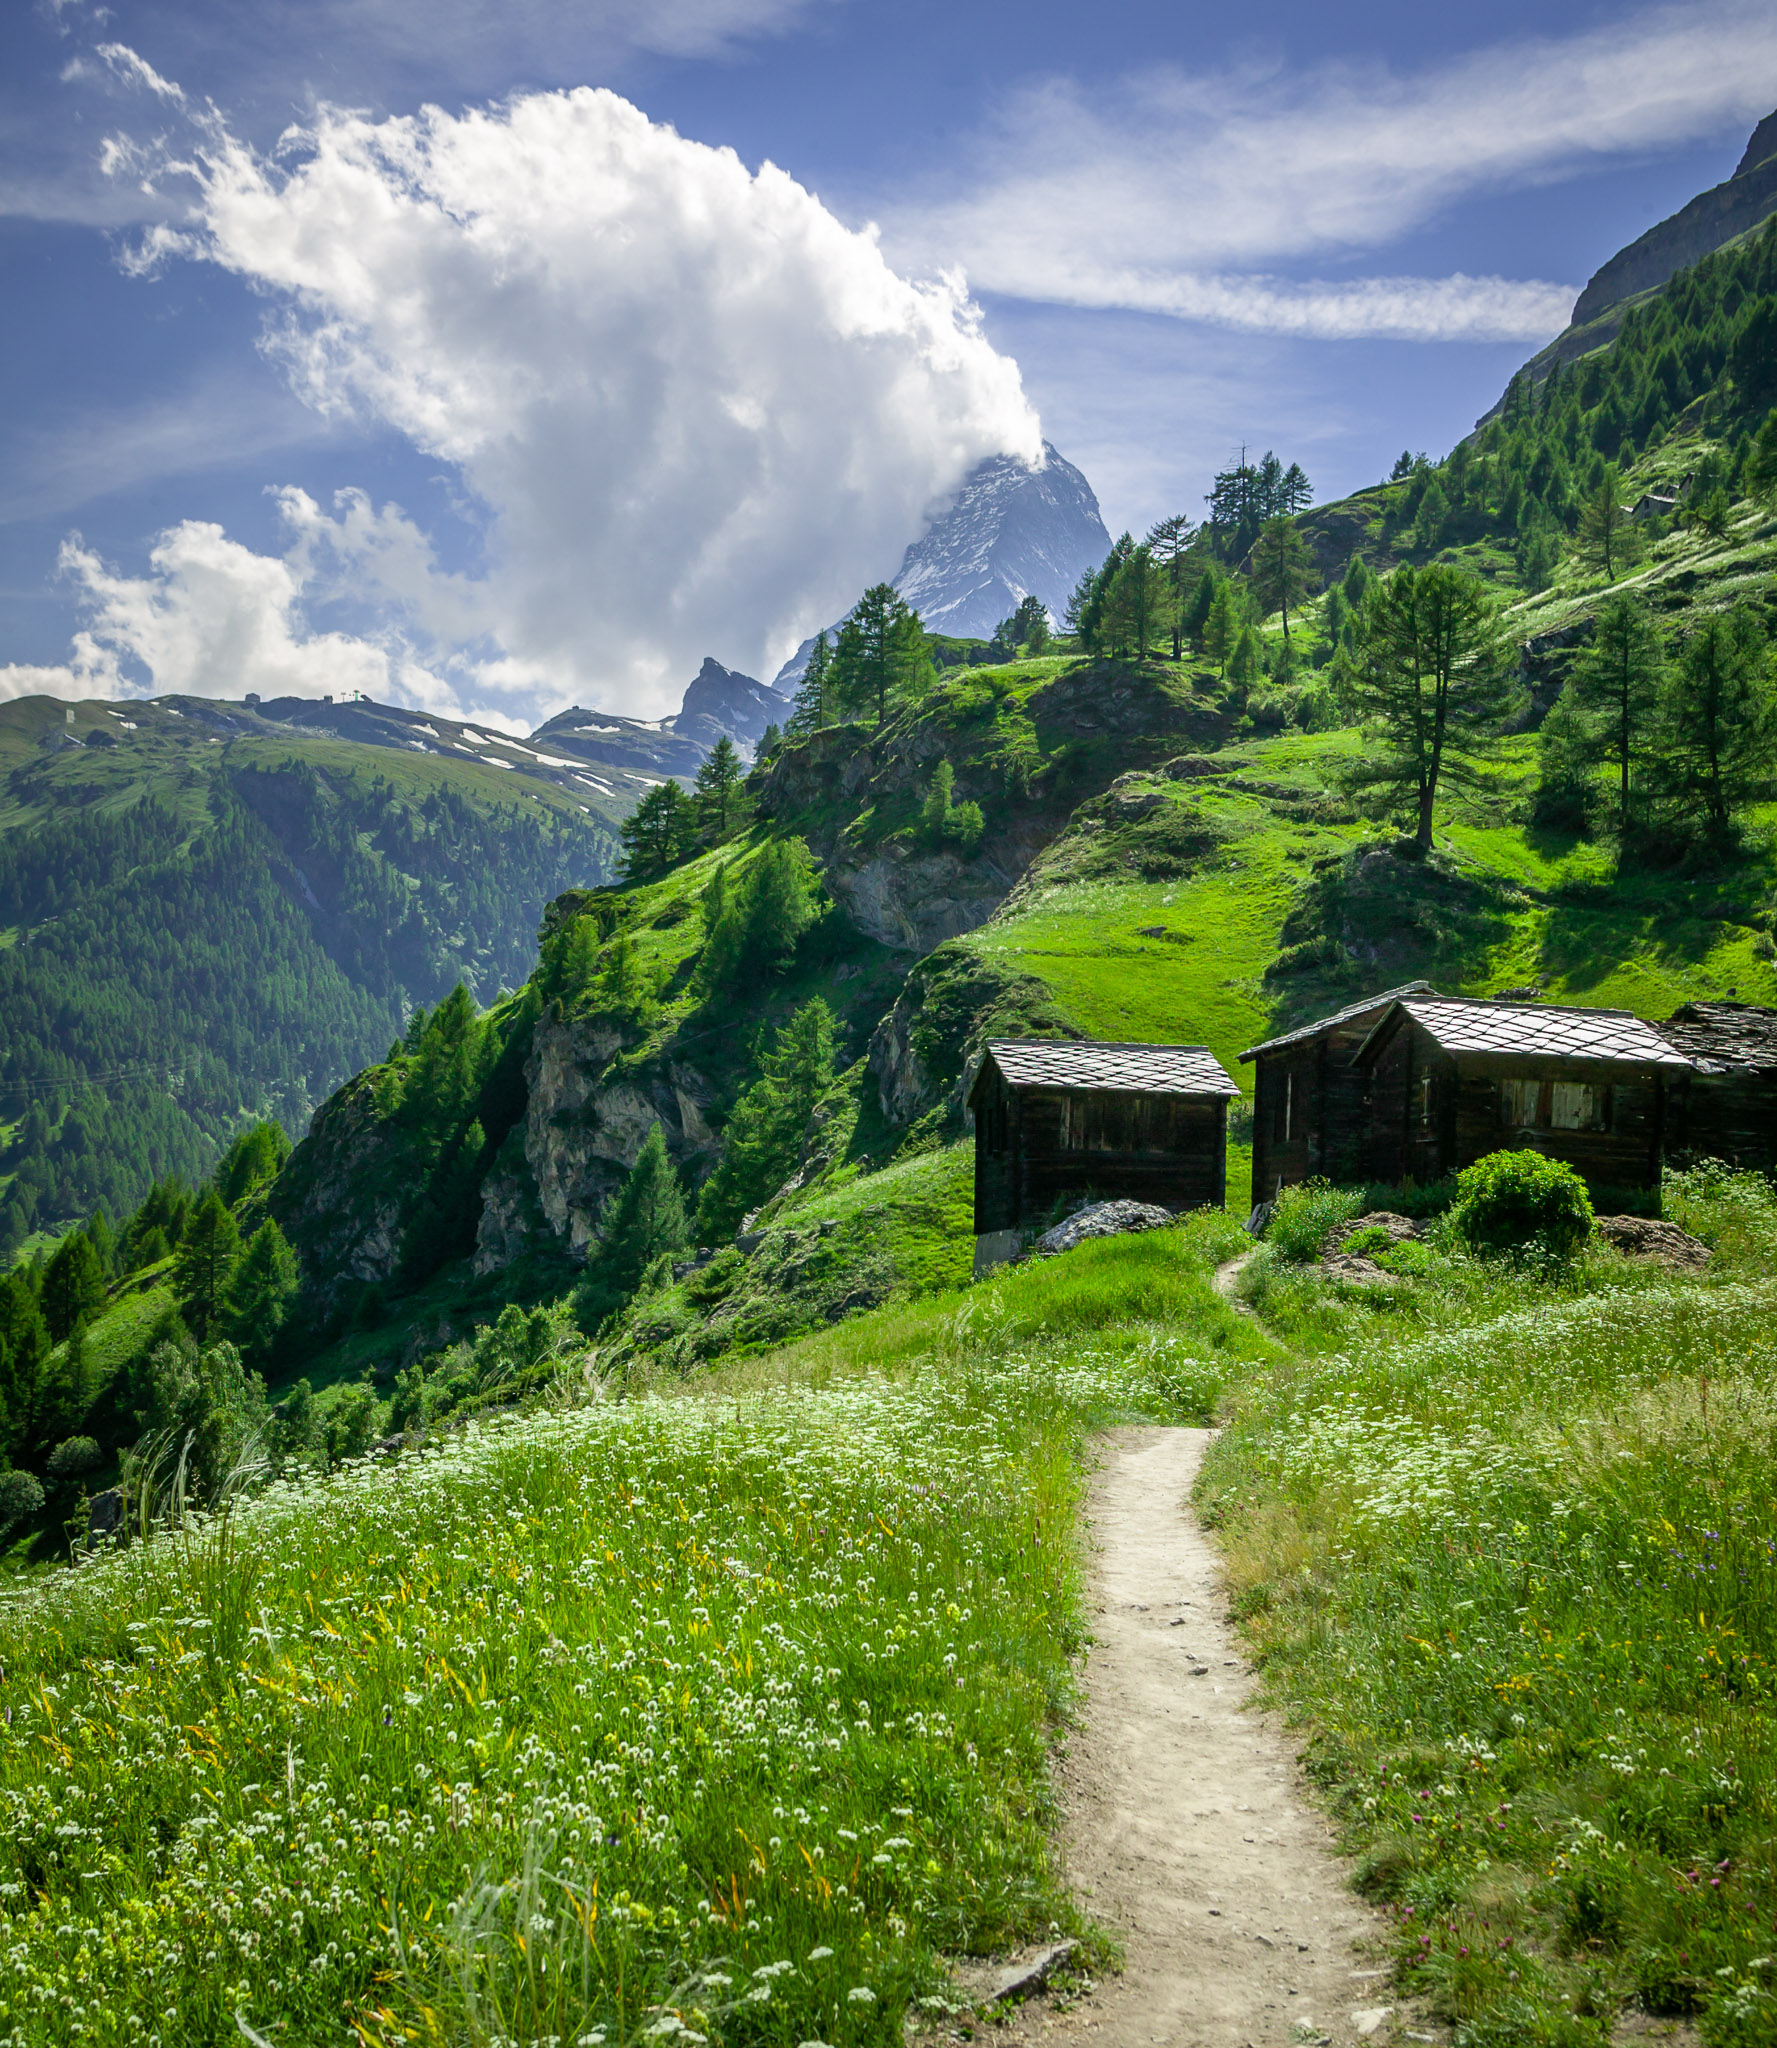 Hike from Zmutt to Zermatt